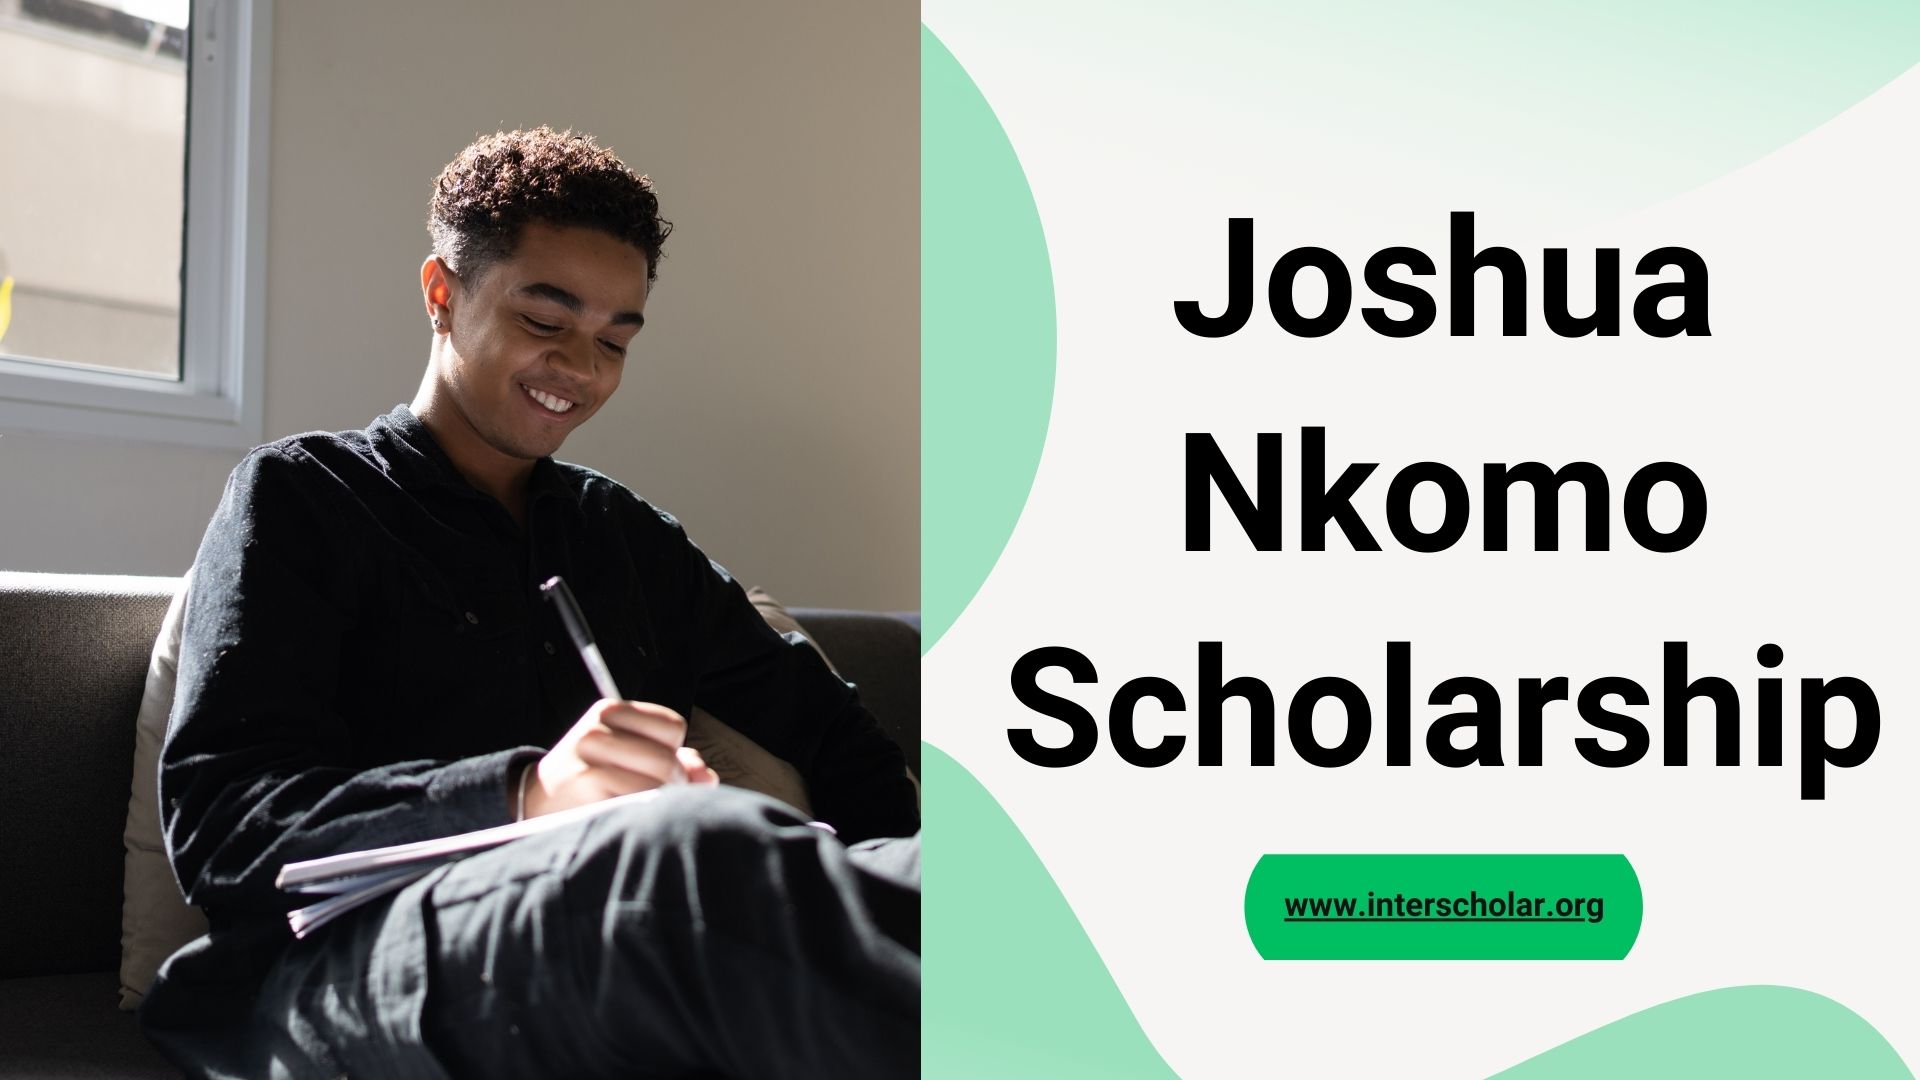 Joshua Nkomo Scholarship: An Opportunity for Aspiring Scholars